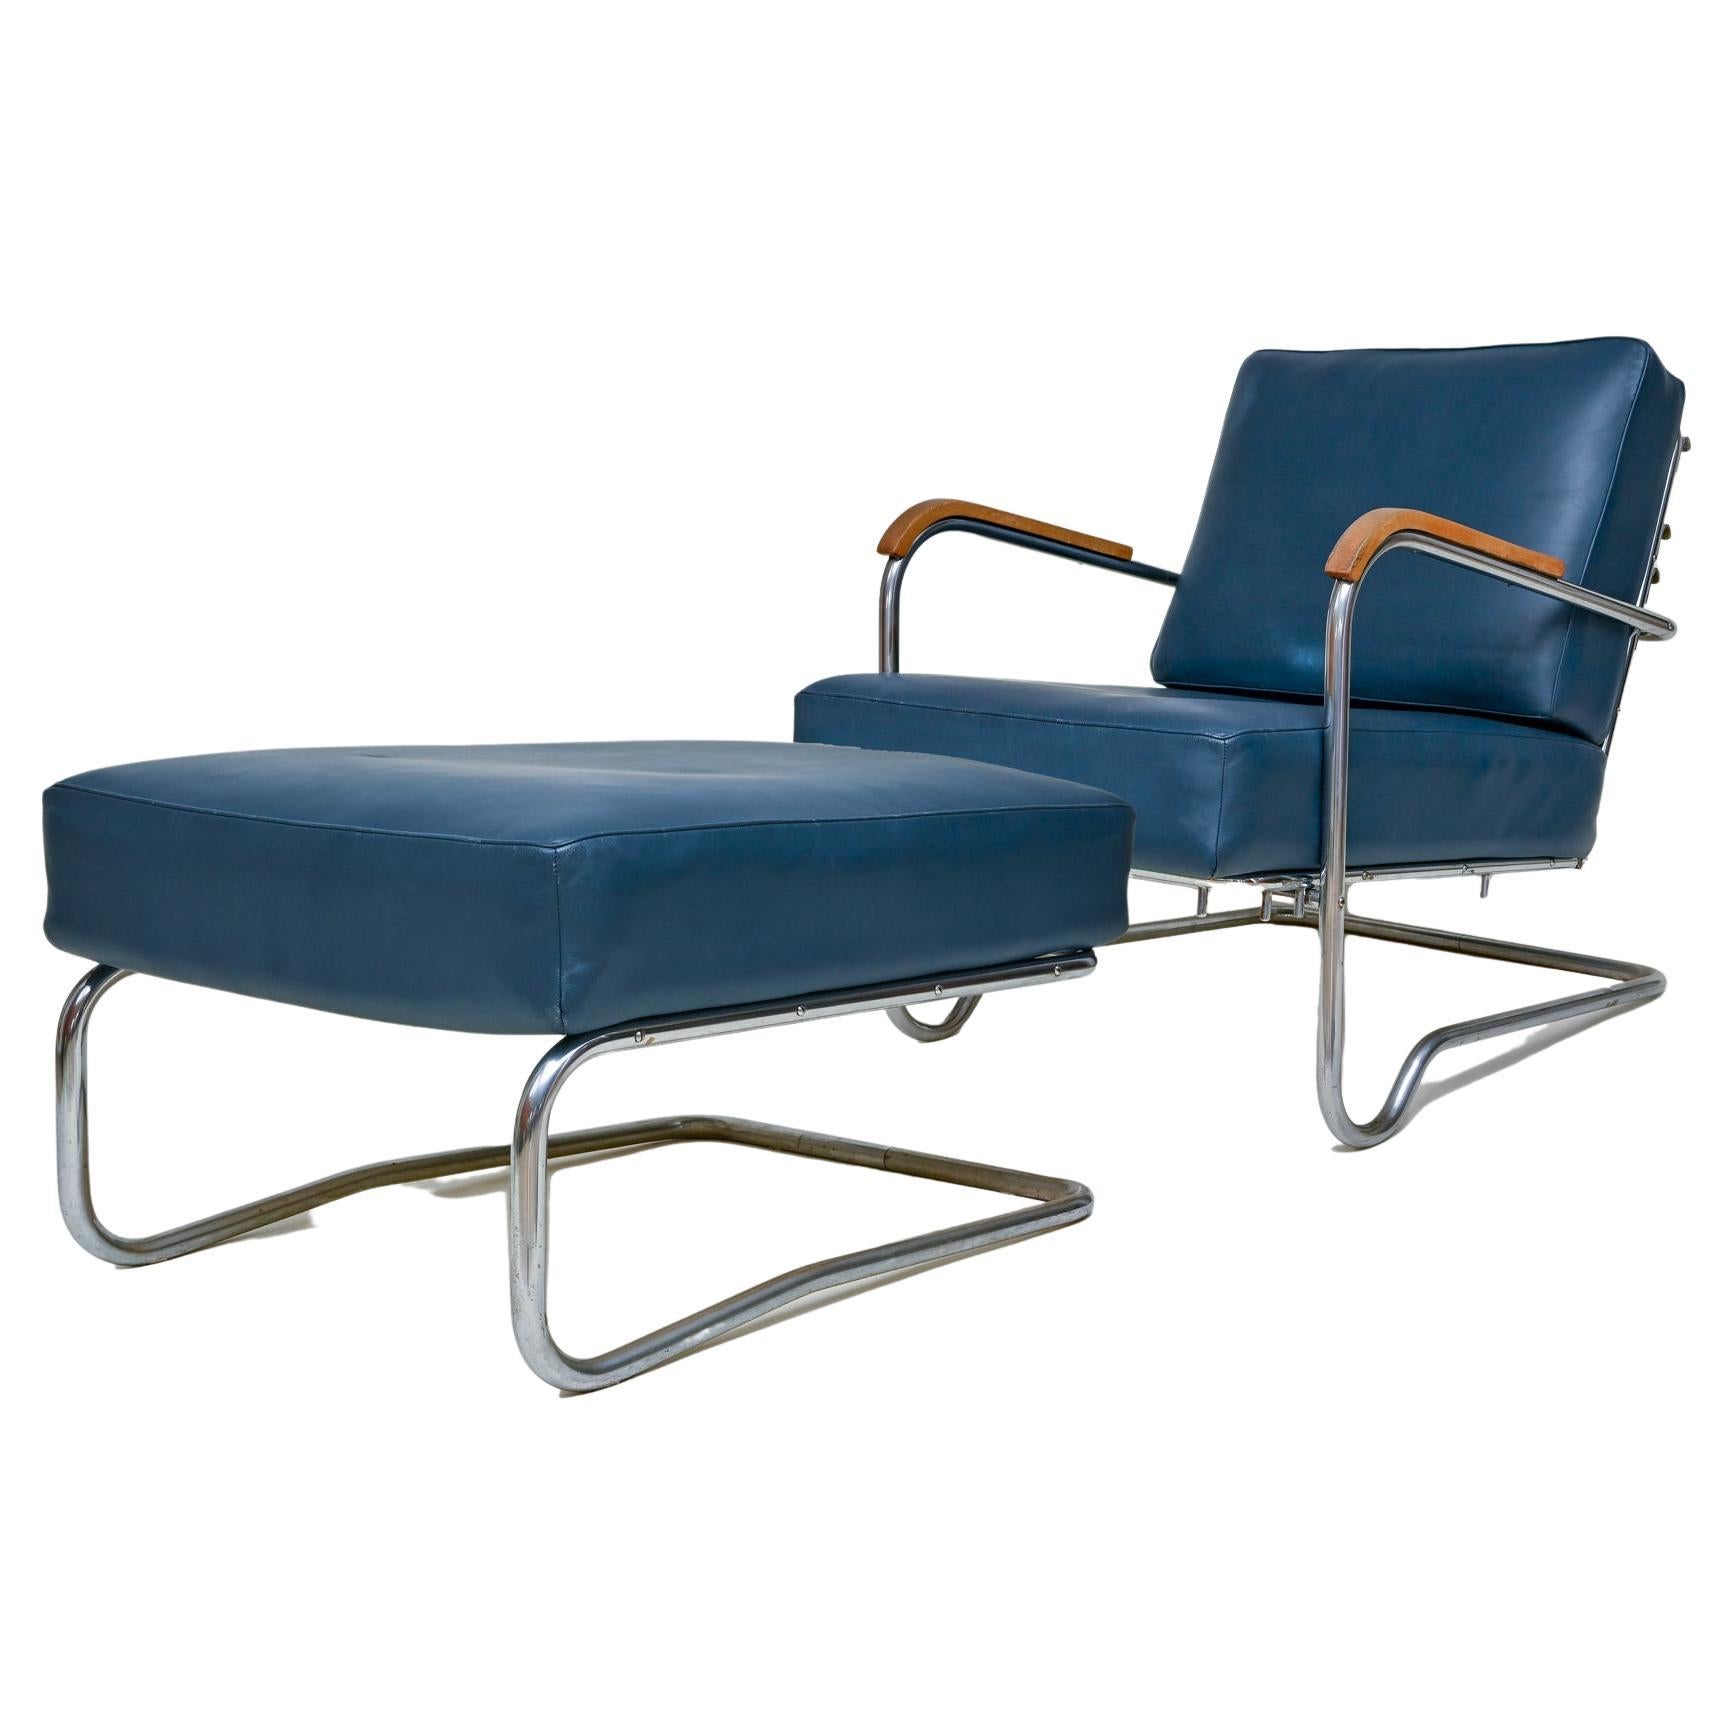 20th Century Lounge Chair with Foot Stool Steel Furniture German Desta Berlin